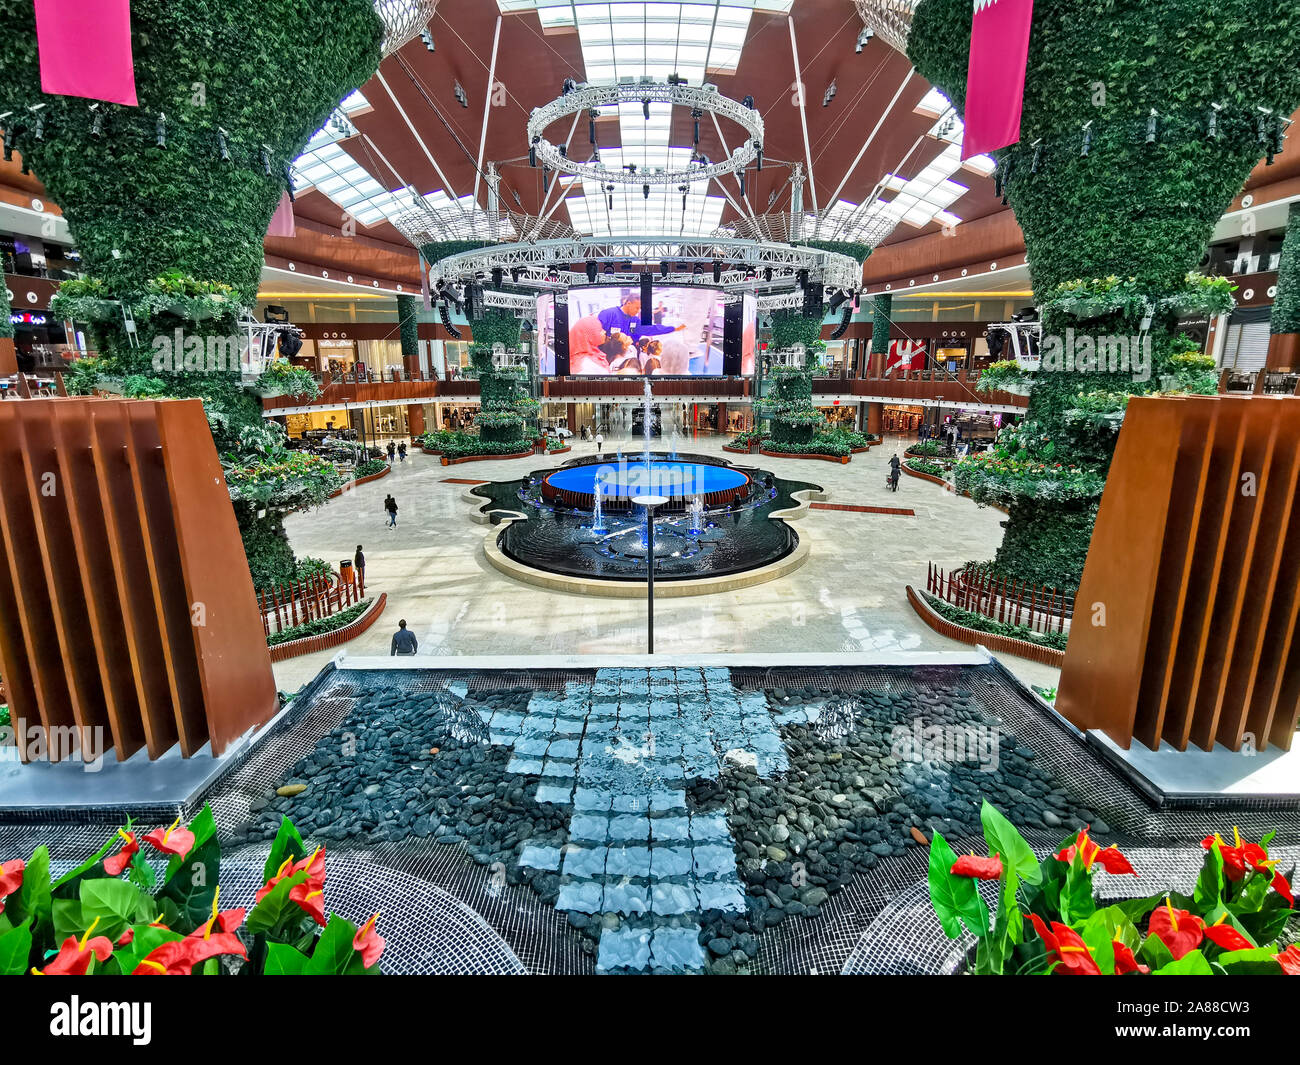 Ottobre 13 2019-Mall of Qatar,Doha, Qatar: il bellissimo centro commerciale in Qatar,il centro commerciale Mall of Qatar con io amo il Qatar digital signage Foto Stock